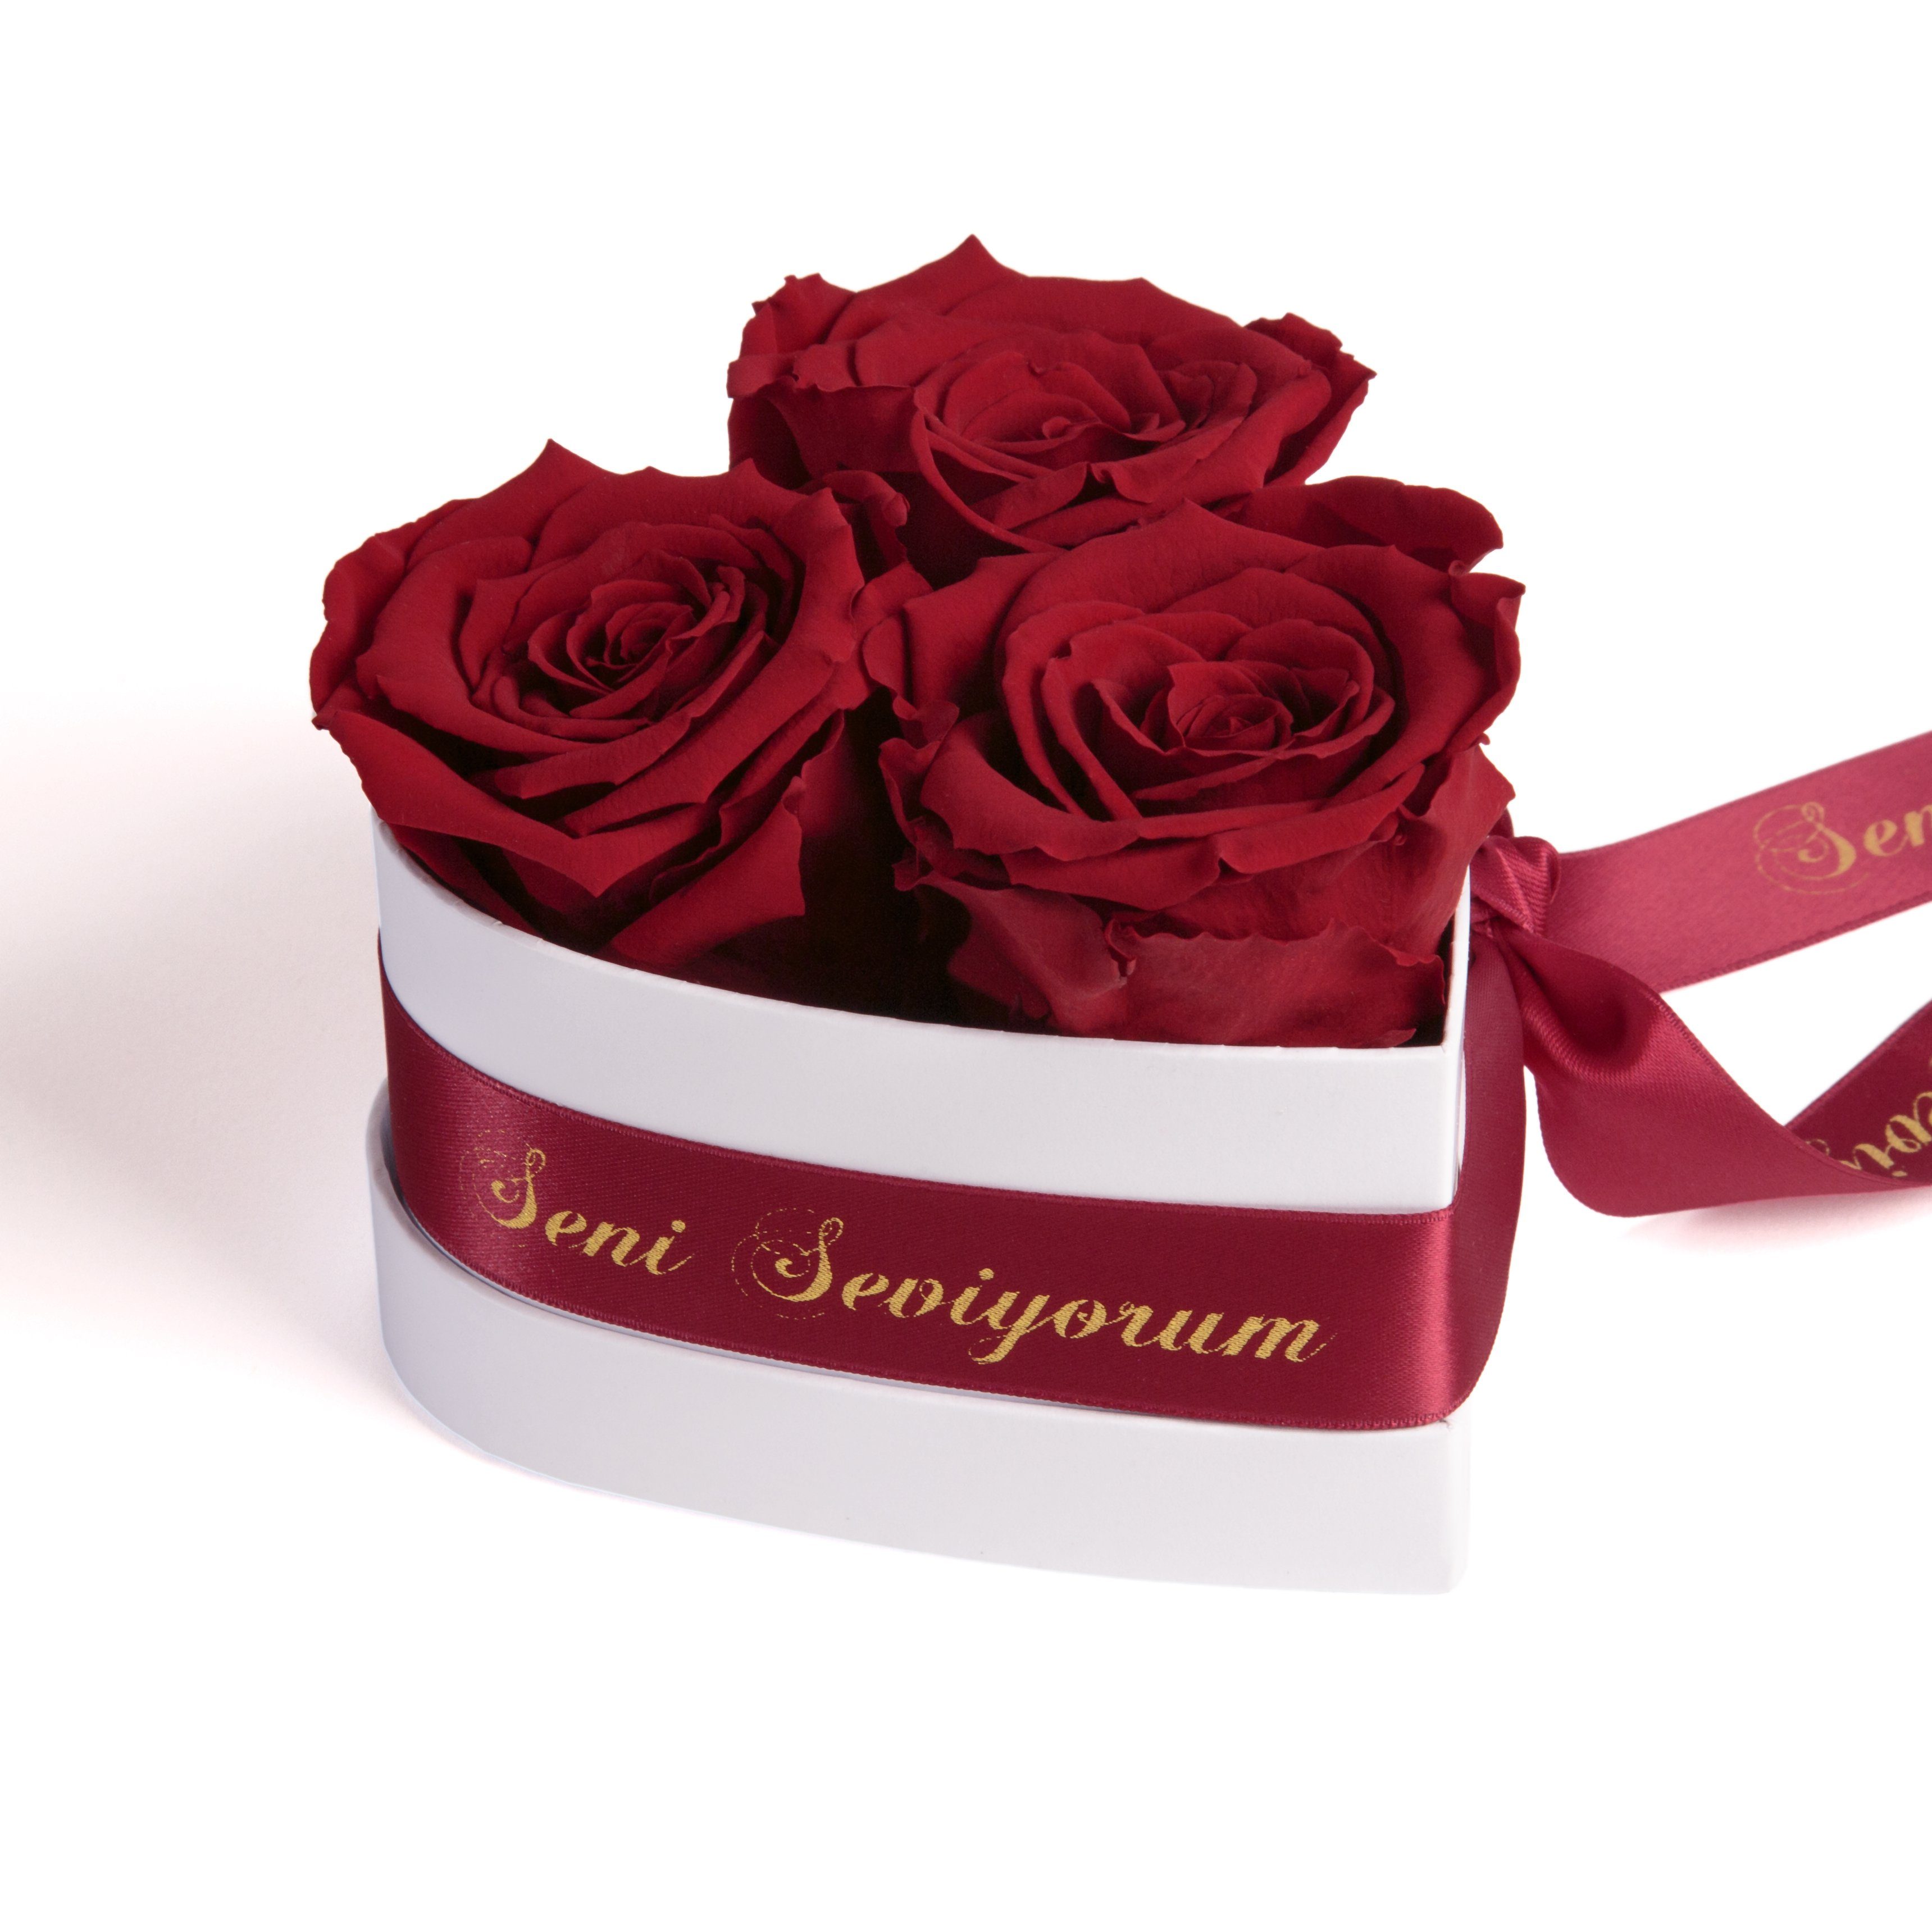 Kunstblume Seni Seviyorum Infinity Rosenbox Herz 3 echte Rosen konserviert Rose, ROSEMARIE SCHULZ Heidelberg, Höhe 10 cm, echte Rosen lang haltbar Burgundy | Kunstblumen